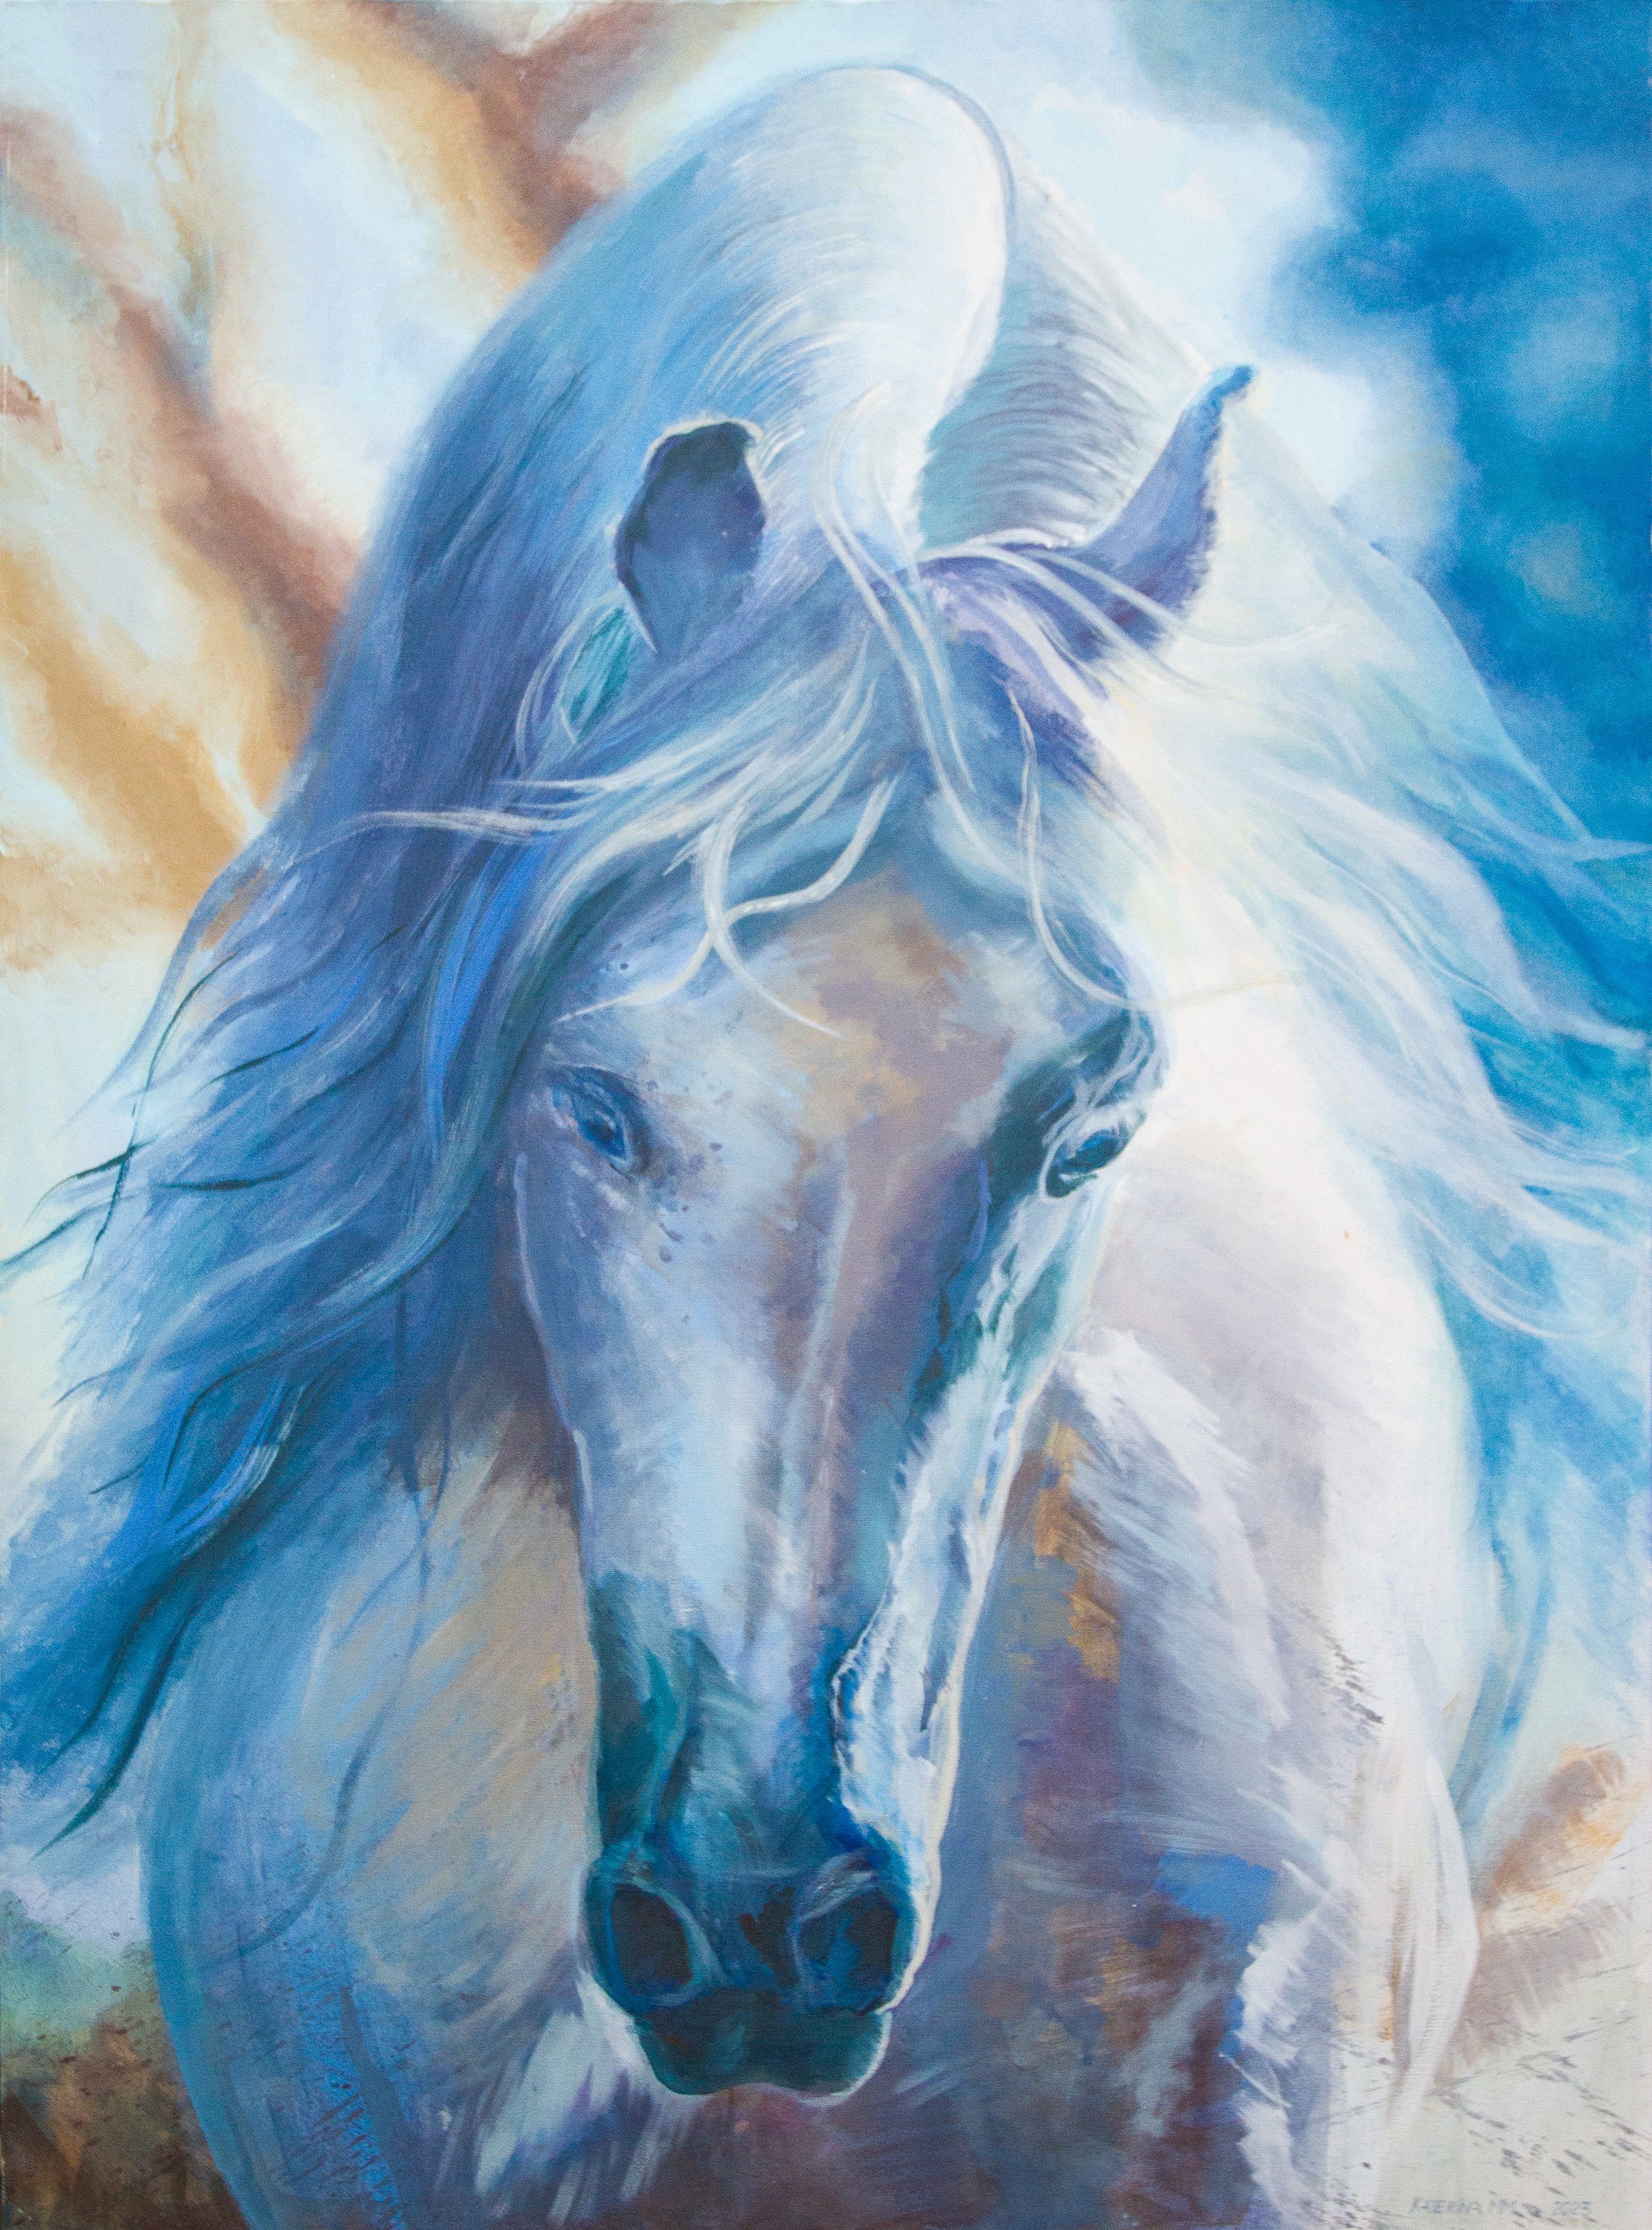  Movement. The white horse